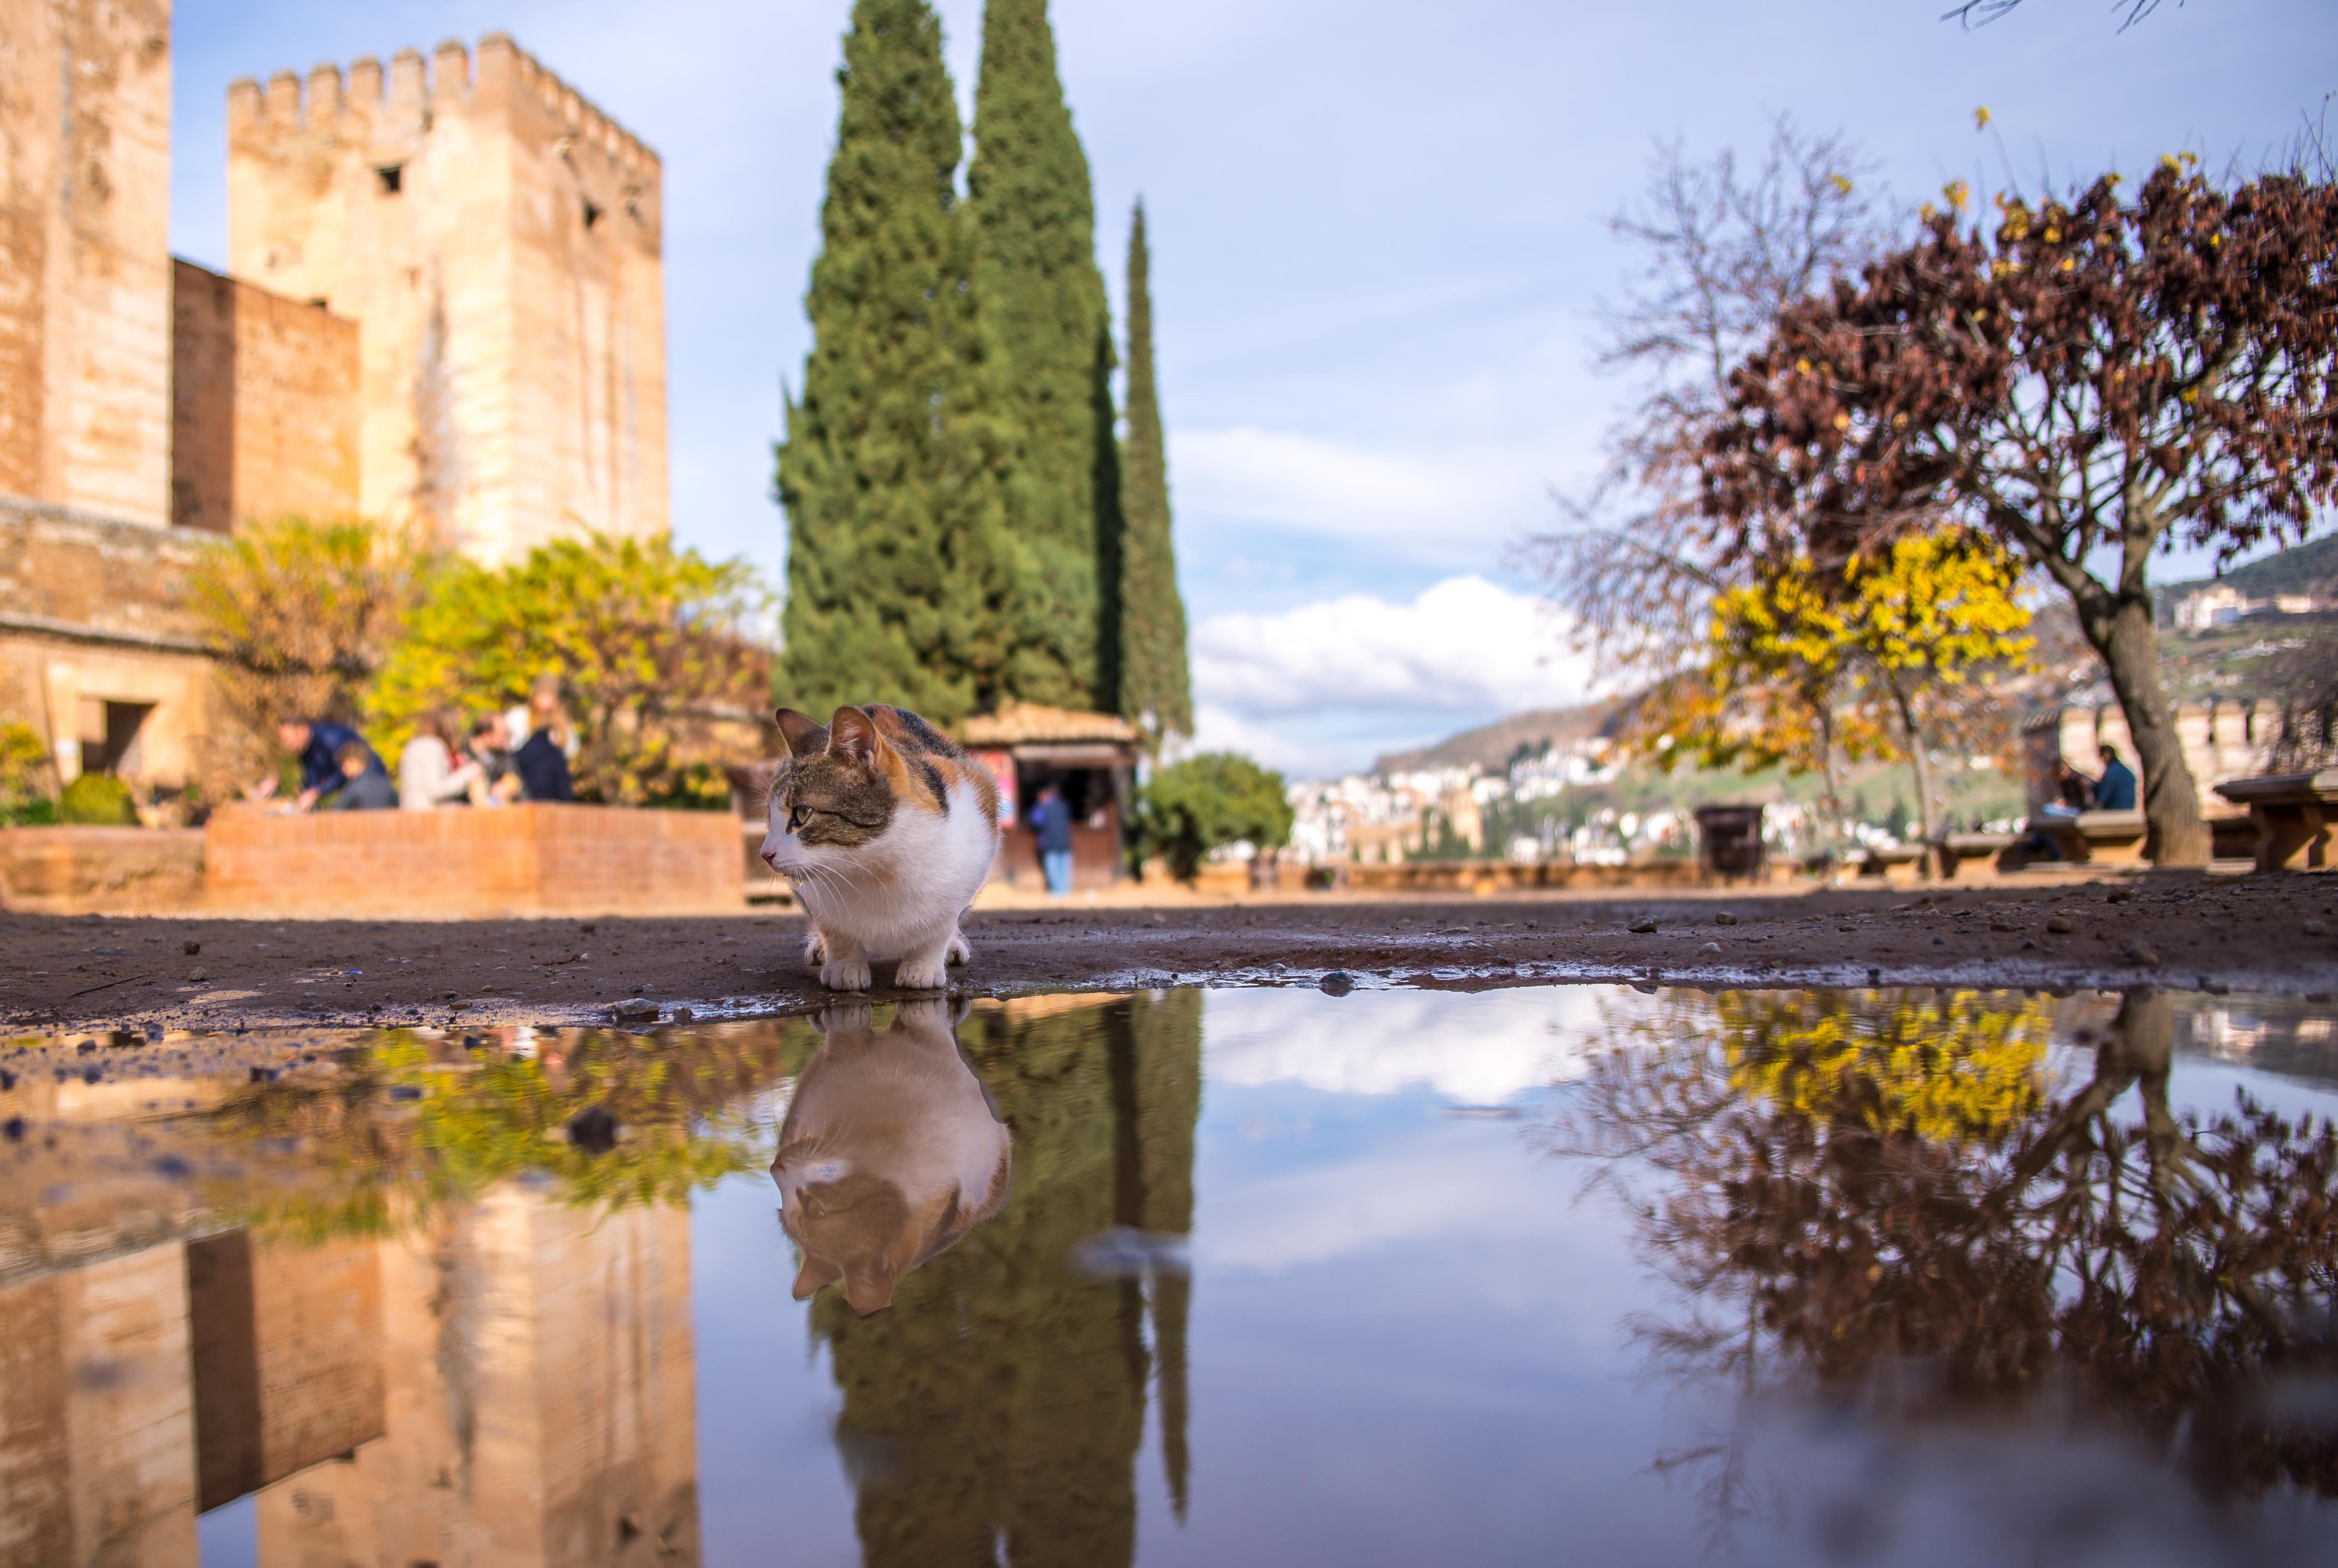 l'Alhambra Alhambra Grenade Andalousie Espagne Blog Voyage Icietlabas